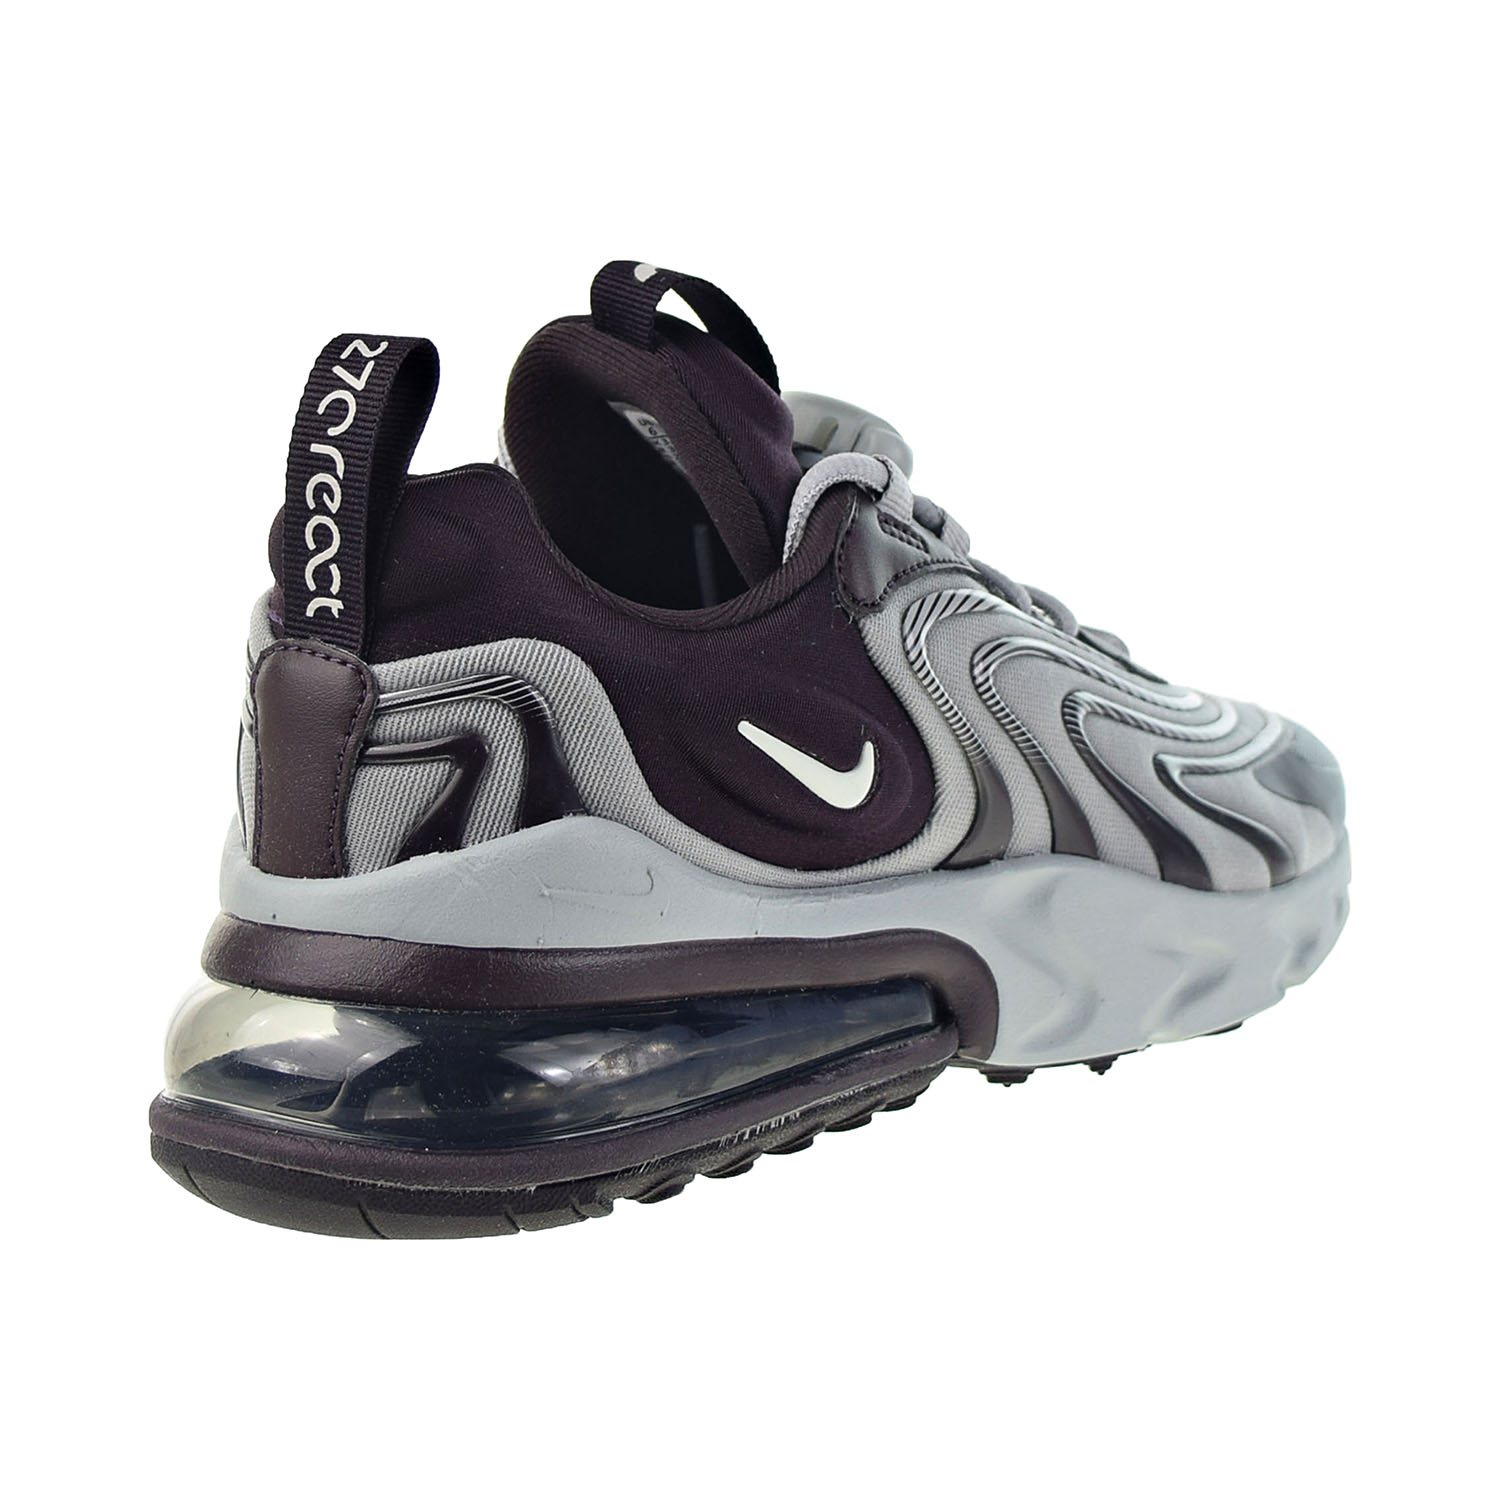 Nike Air Max 270 React ENG Women's Shoes Burgundy Ash-Smoke Grey ck2595-600 - image 3 of 6